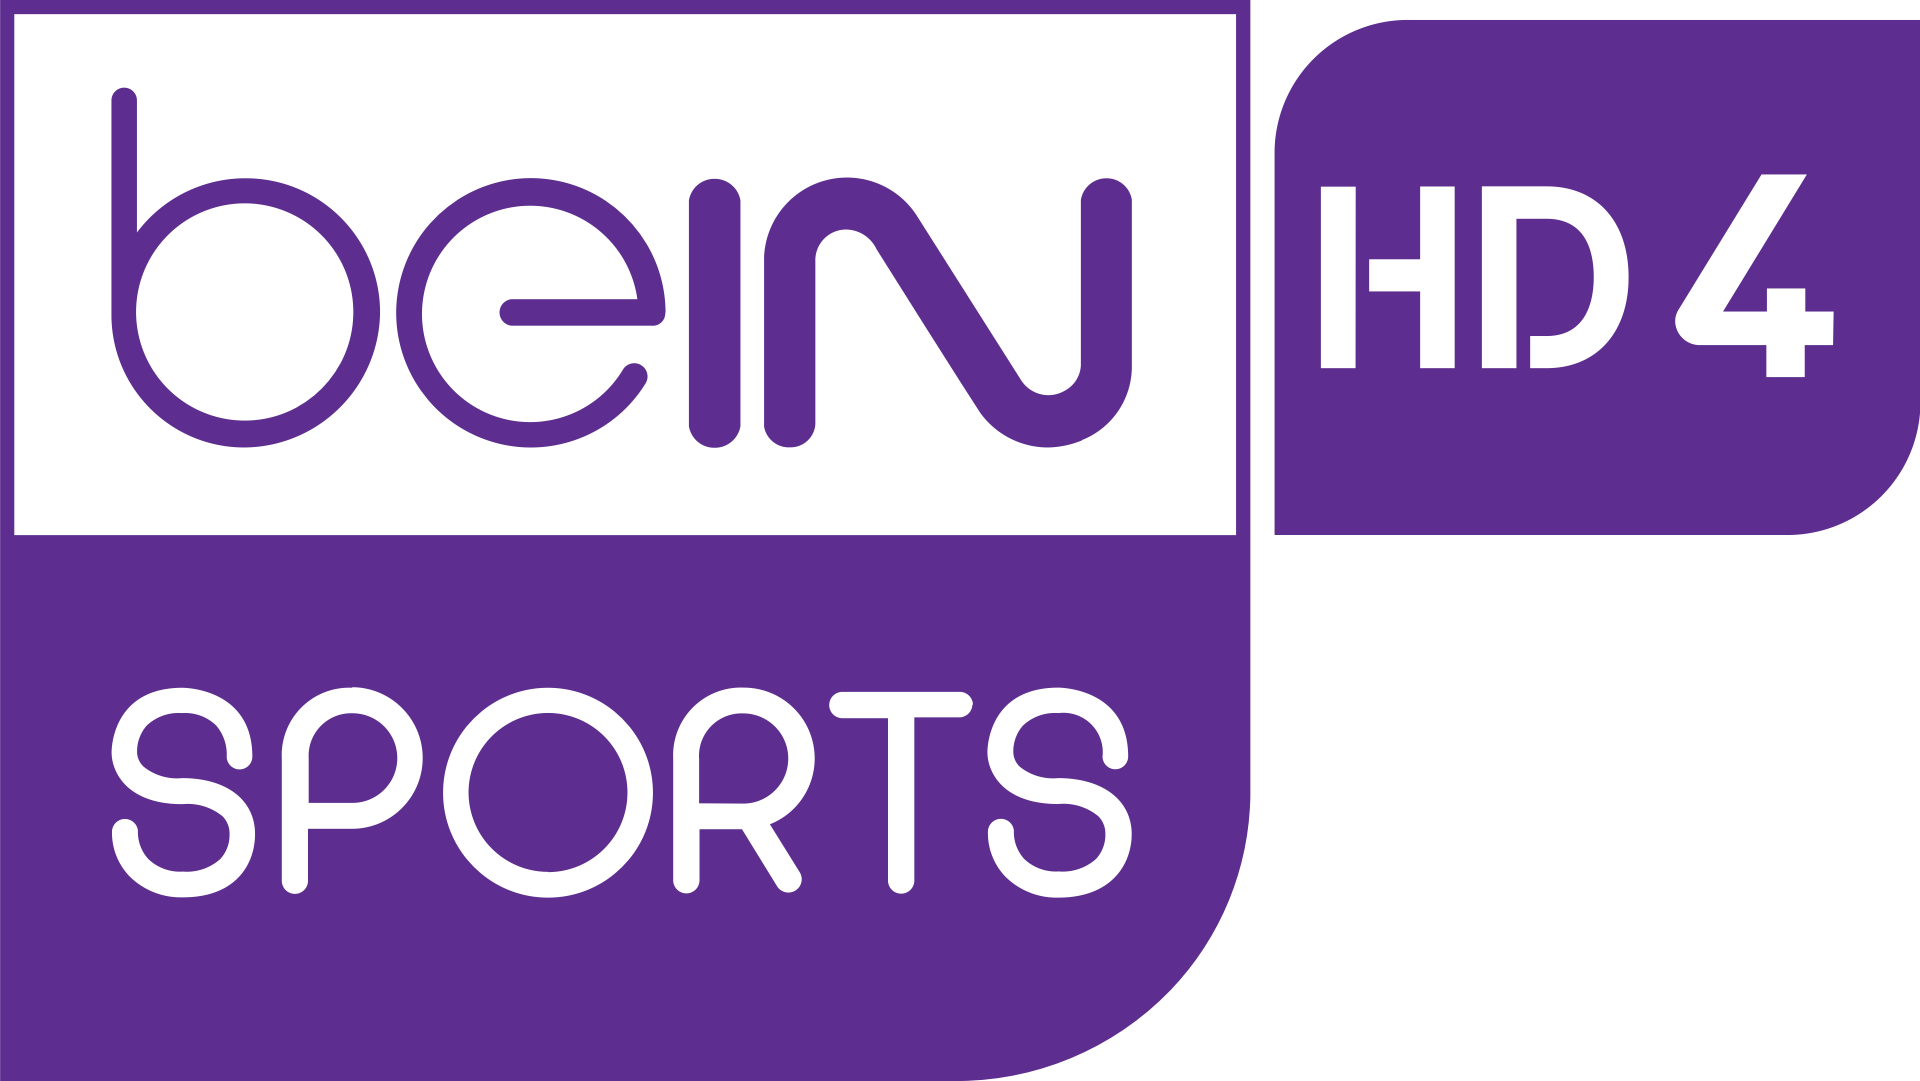 bein-sports-HD4.png  by otan